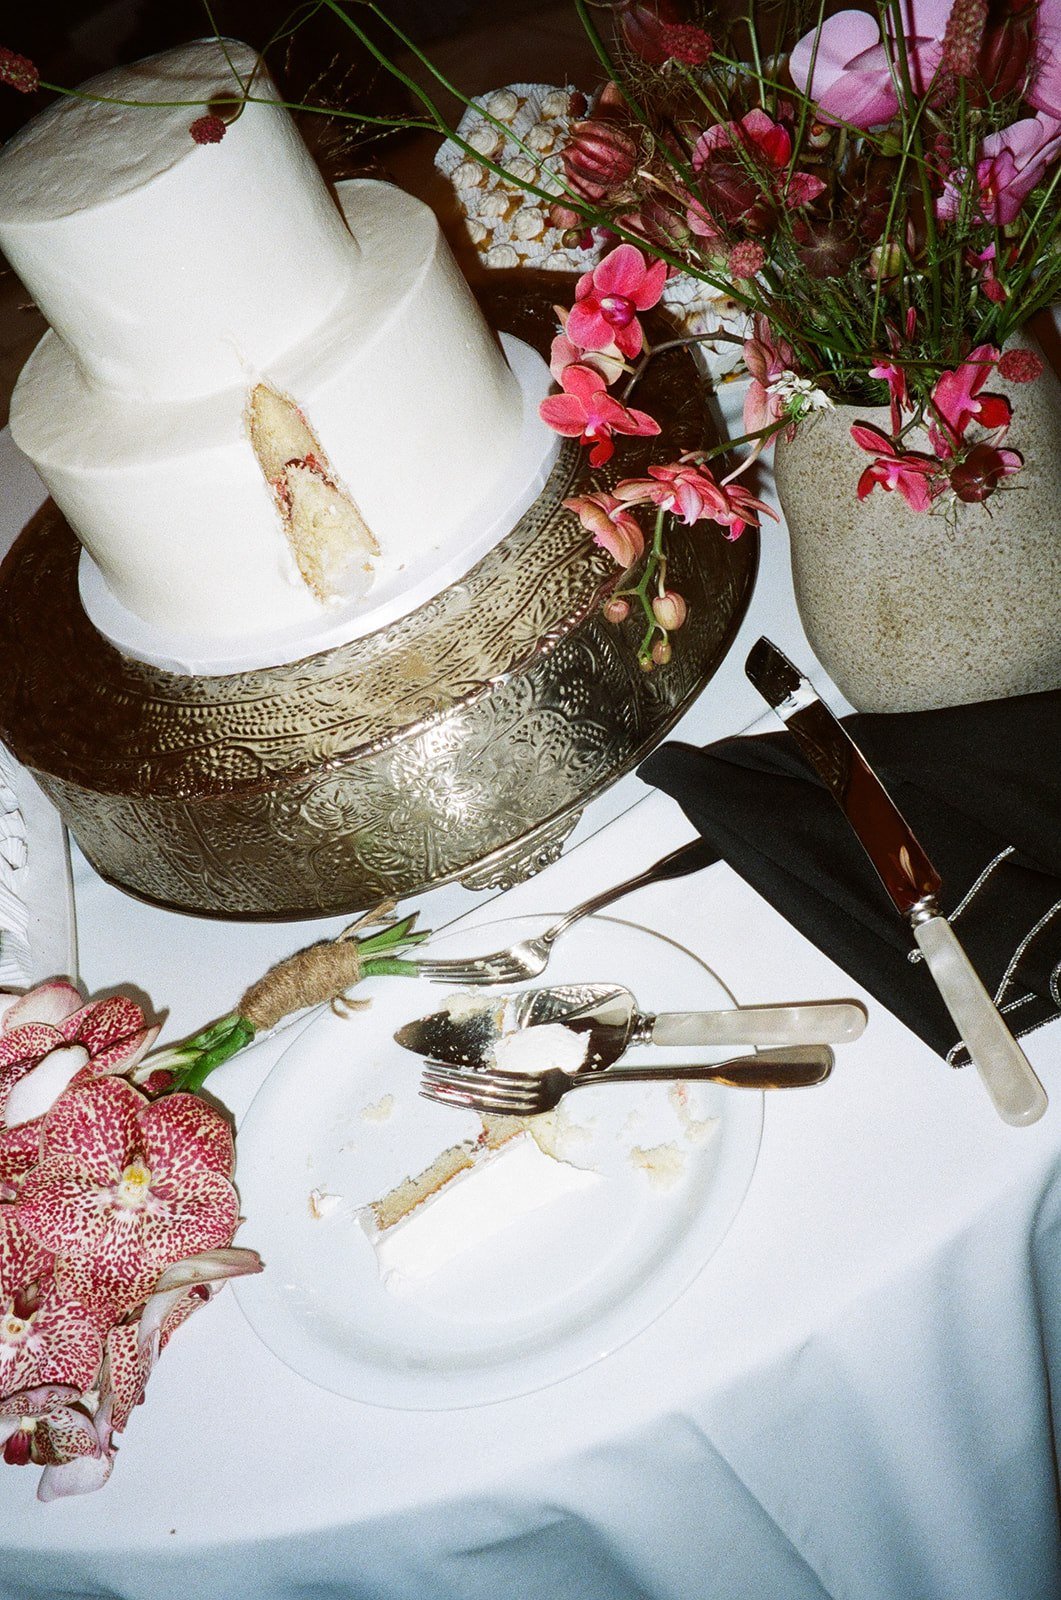 Film photo of white wedding cake